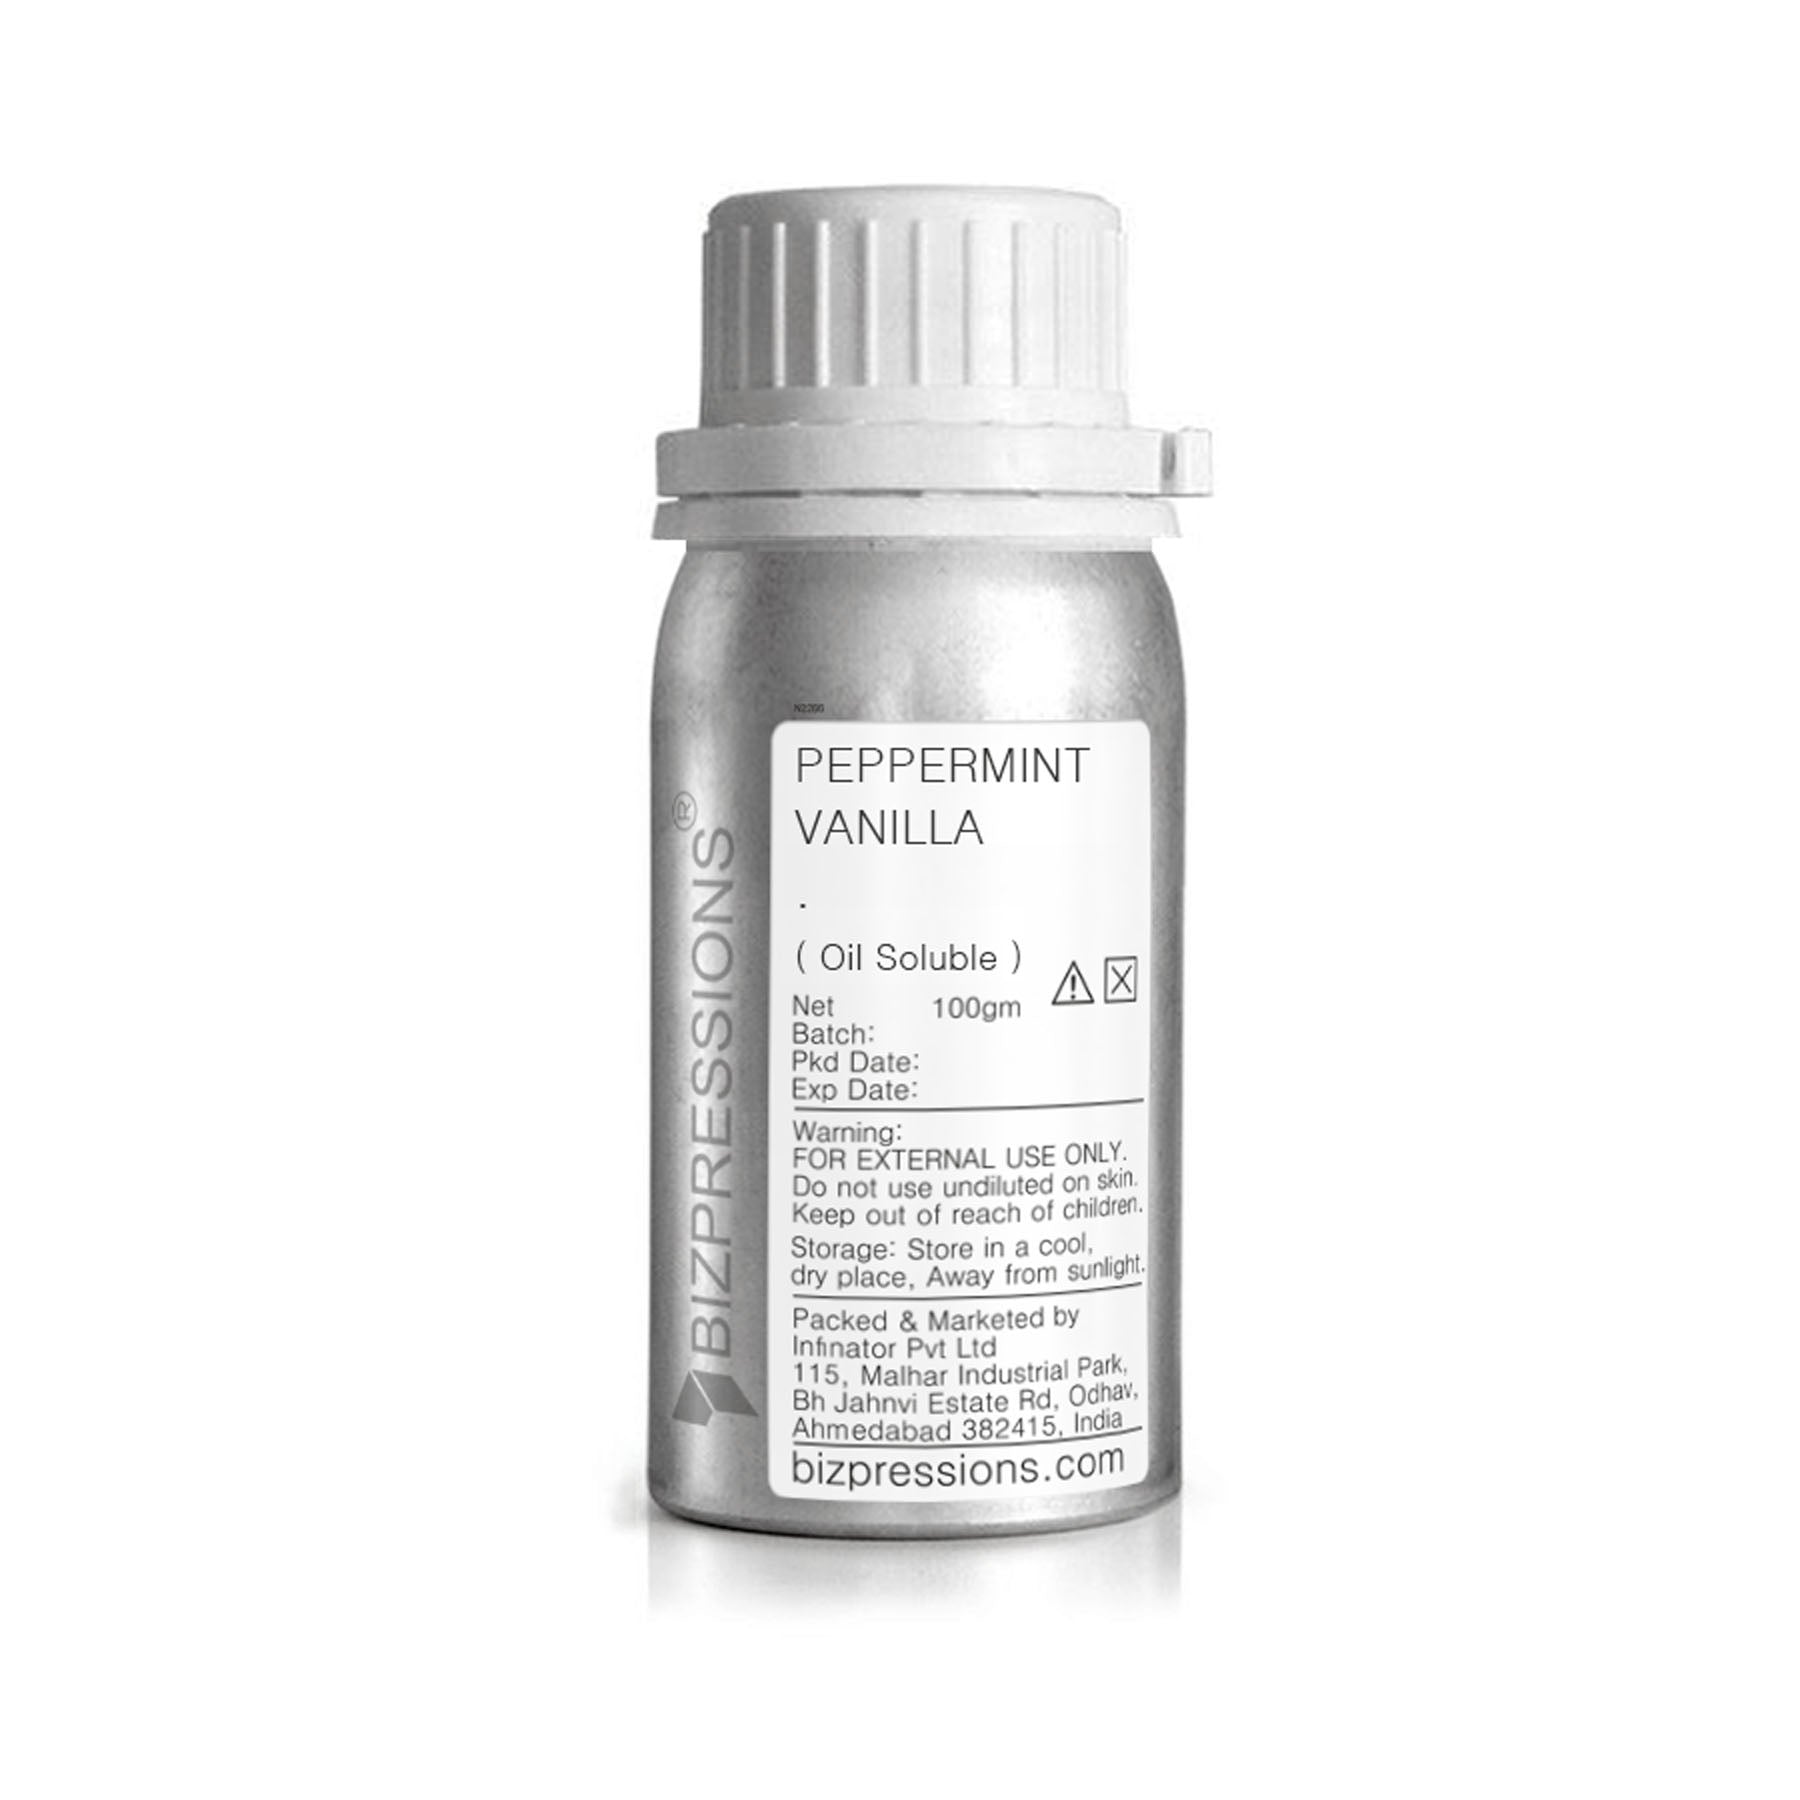 PEPPERMINT VANILLA - Fragrance ( Oil Soluble ) - 100 gm